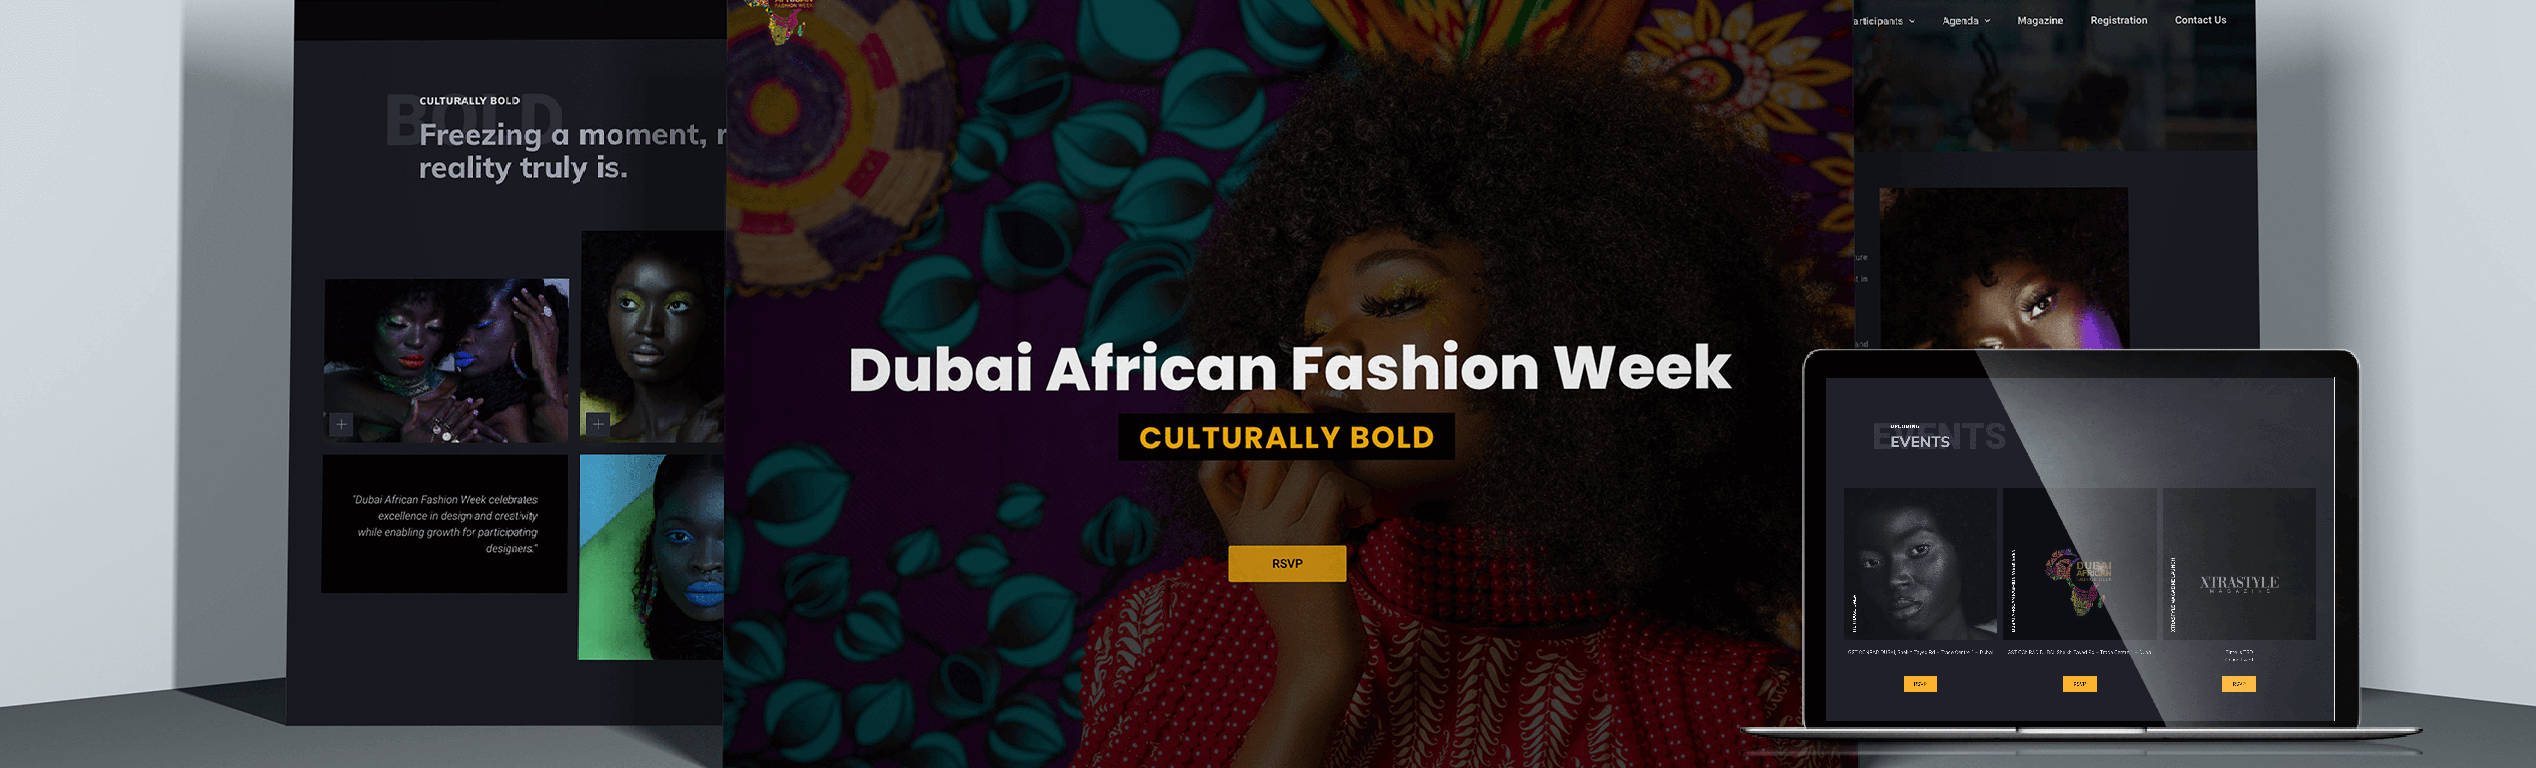 Dubai African Fashion Week